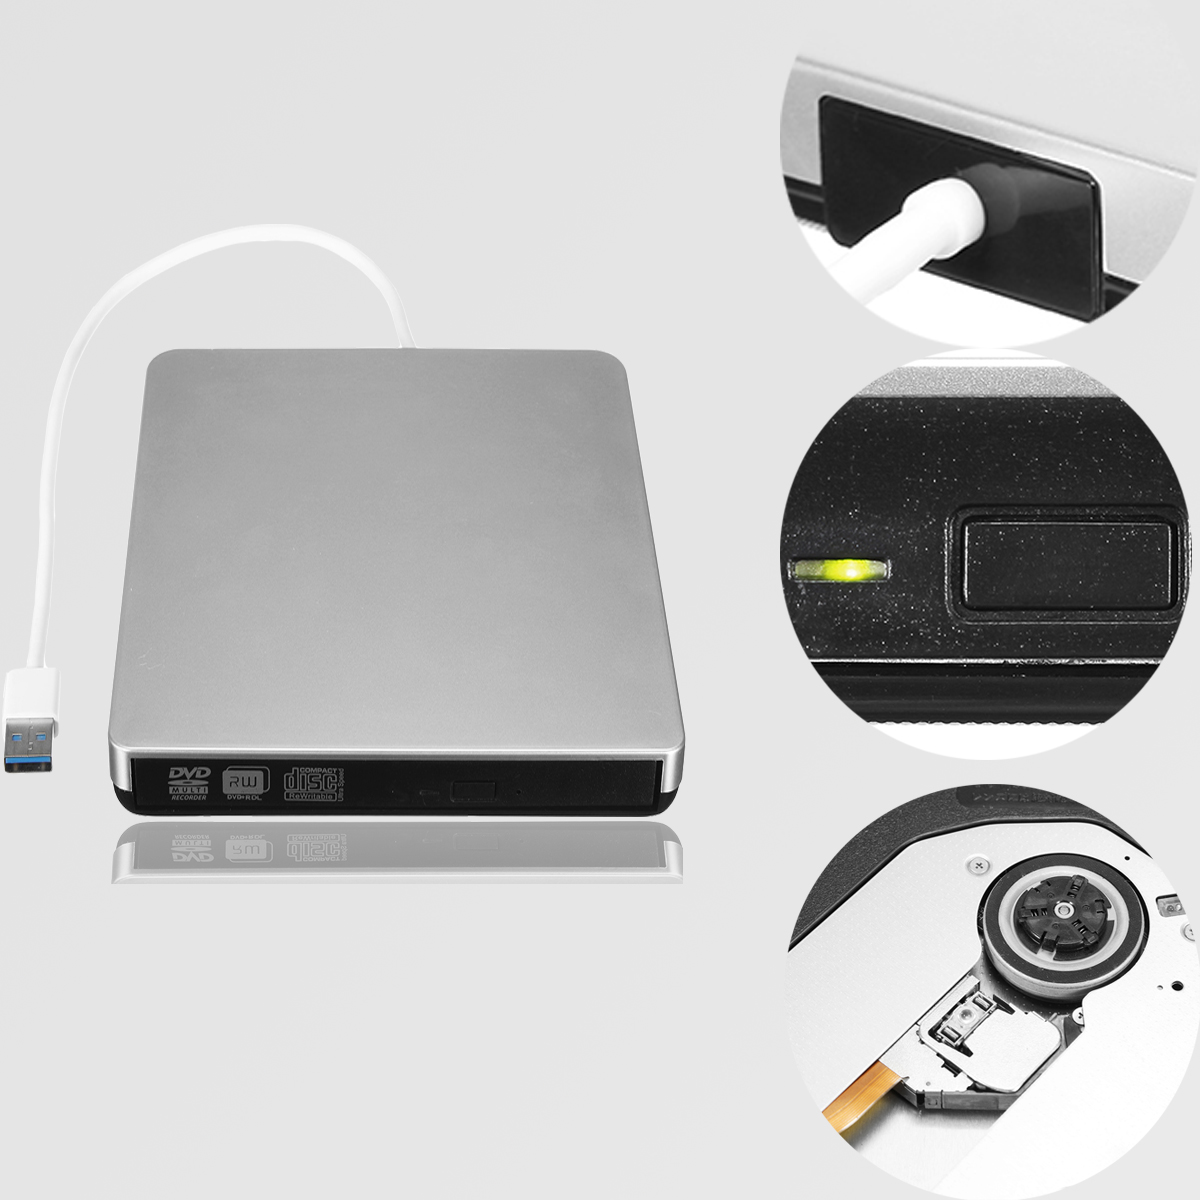 External-USB-30-DVD-CD-RW-Drive-Writer-Burner-DVD-Player-Optical-Drives-For-Laptop-Desktop-PC-1194391